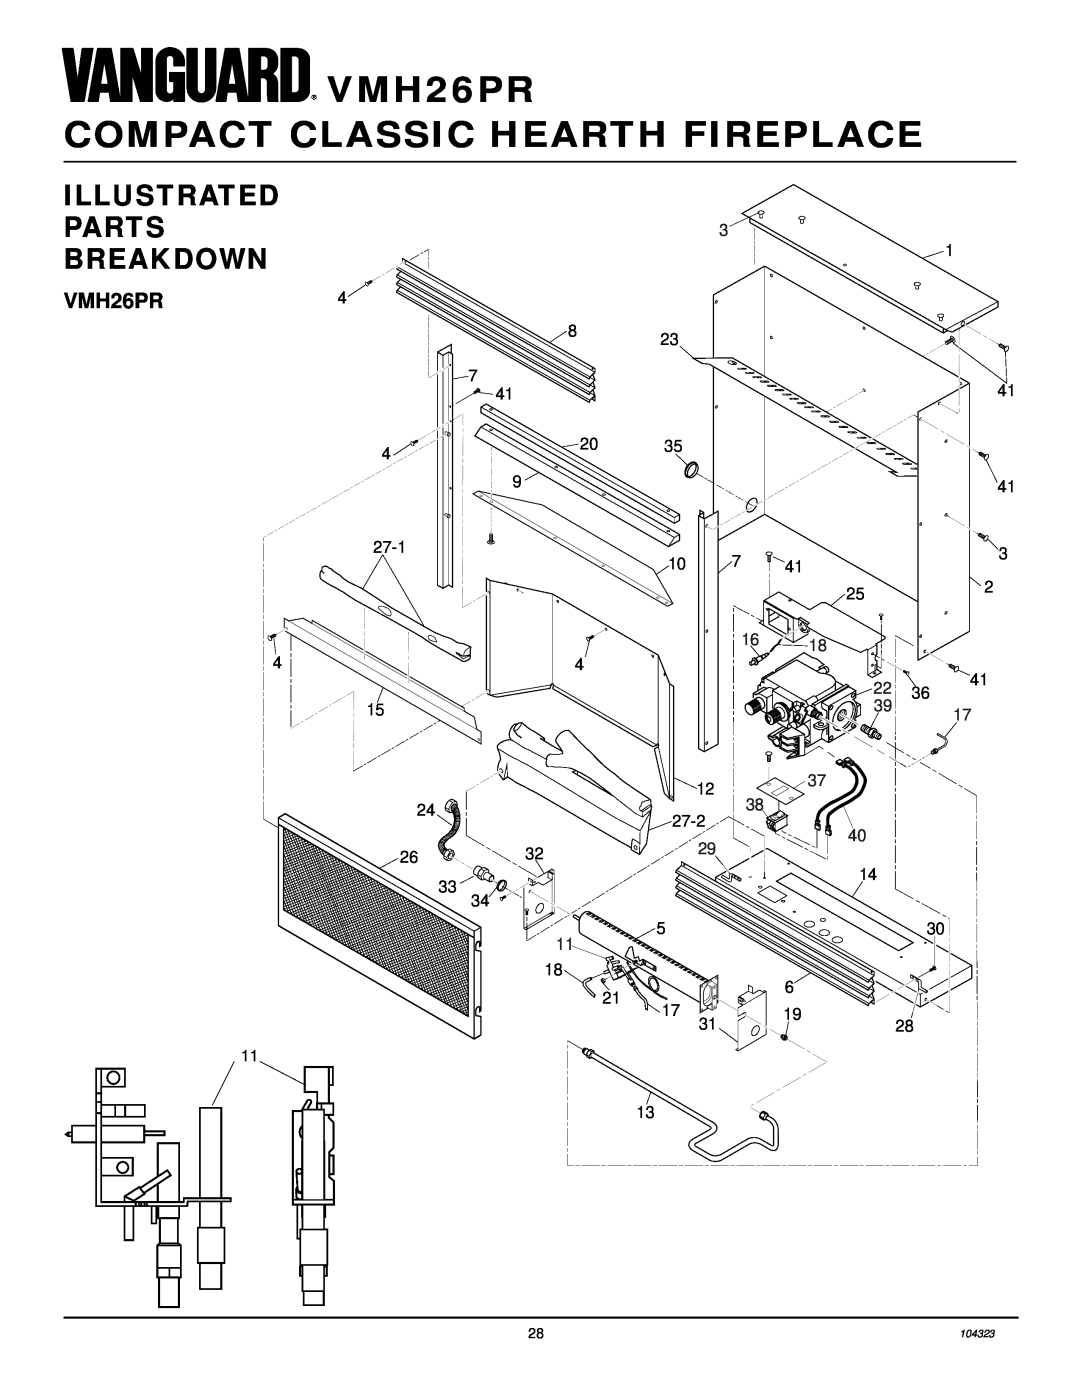 Desa installation manual Illustrated Parts Breakdown, VMH26PR4, VMH26PR COMPACT CLASSIC HEARTH FIREPLACE 